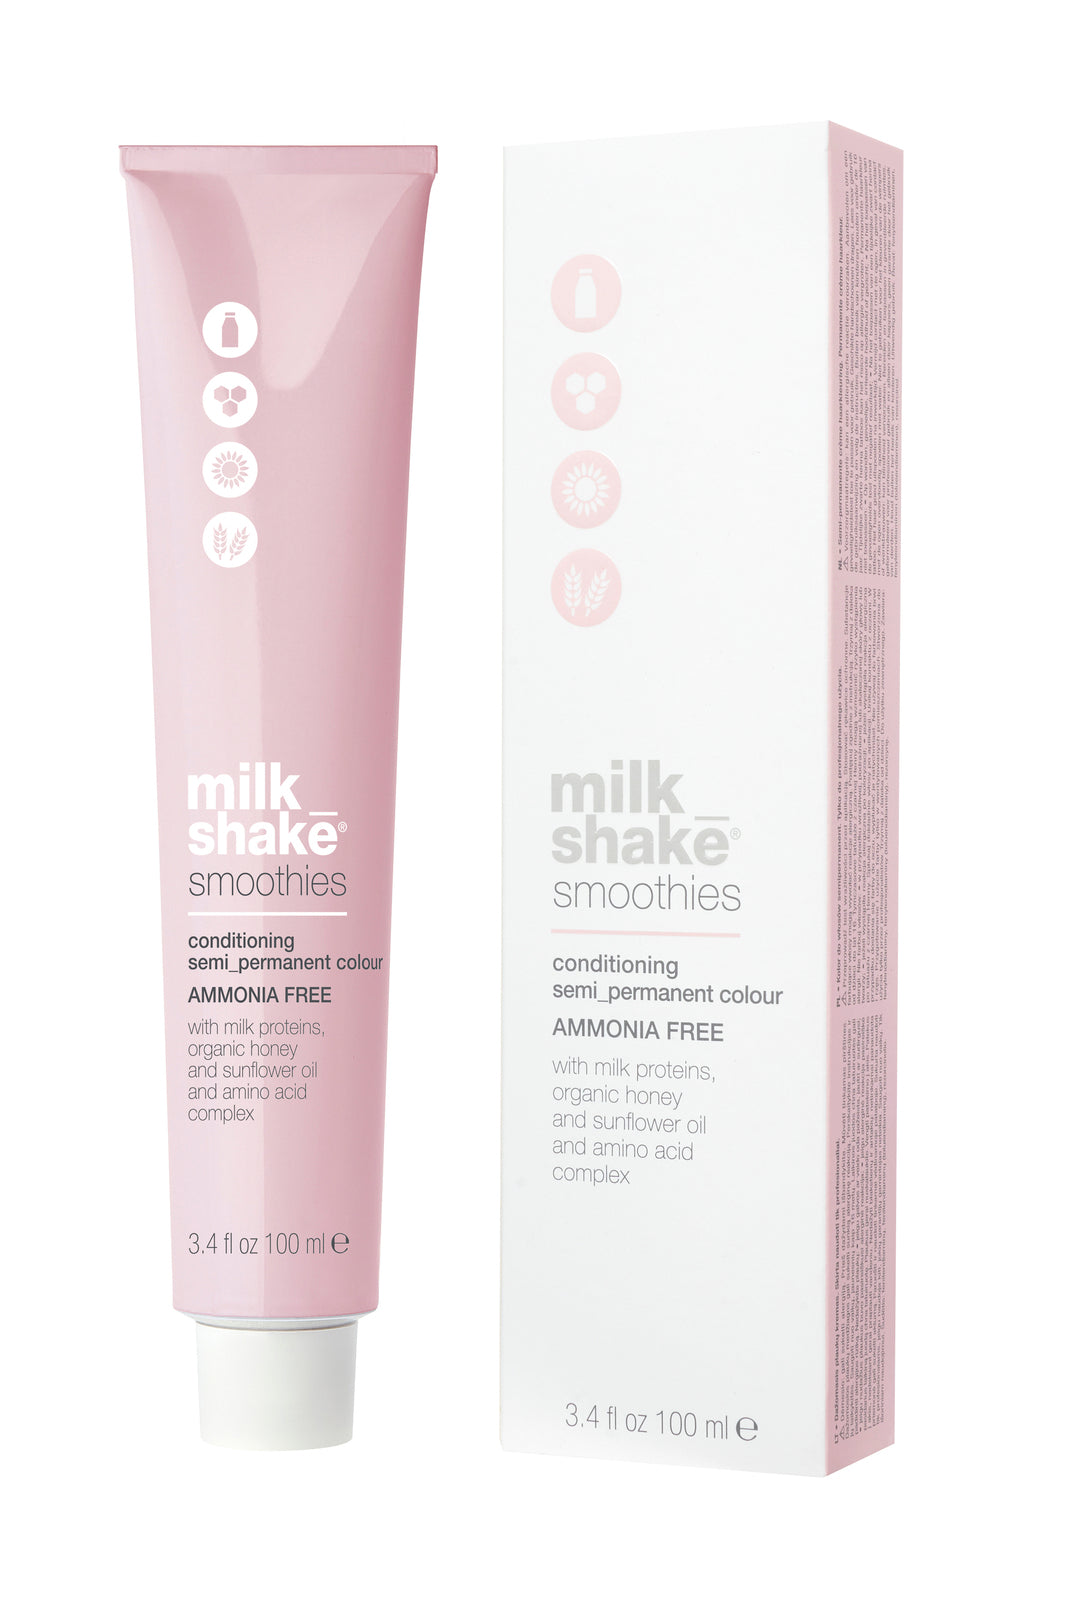 Milkshake smoothies semi-permanent color 7